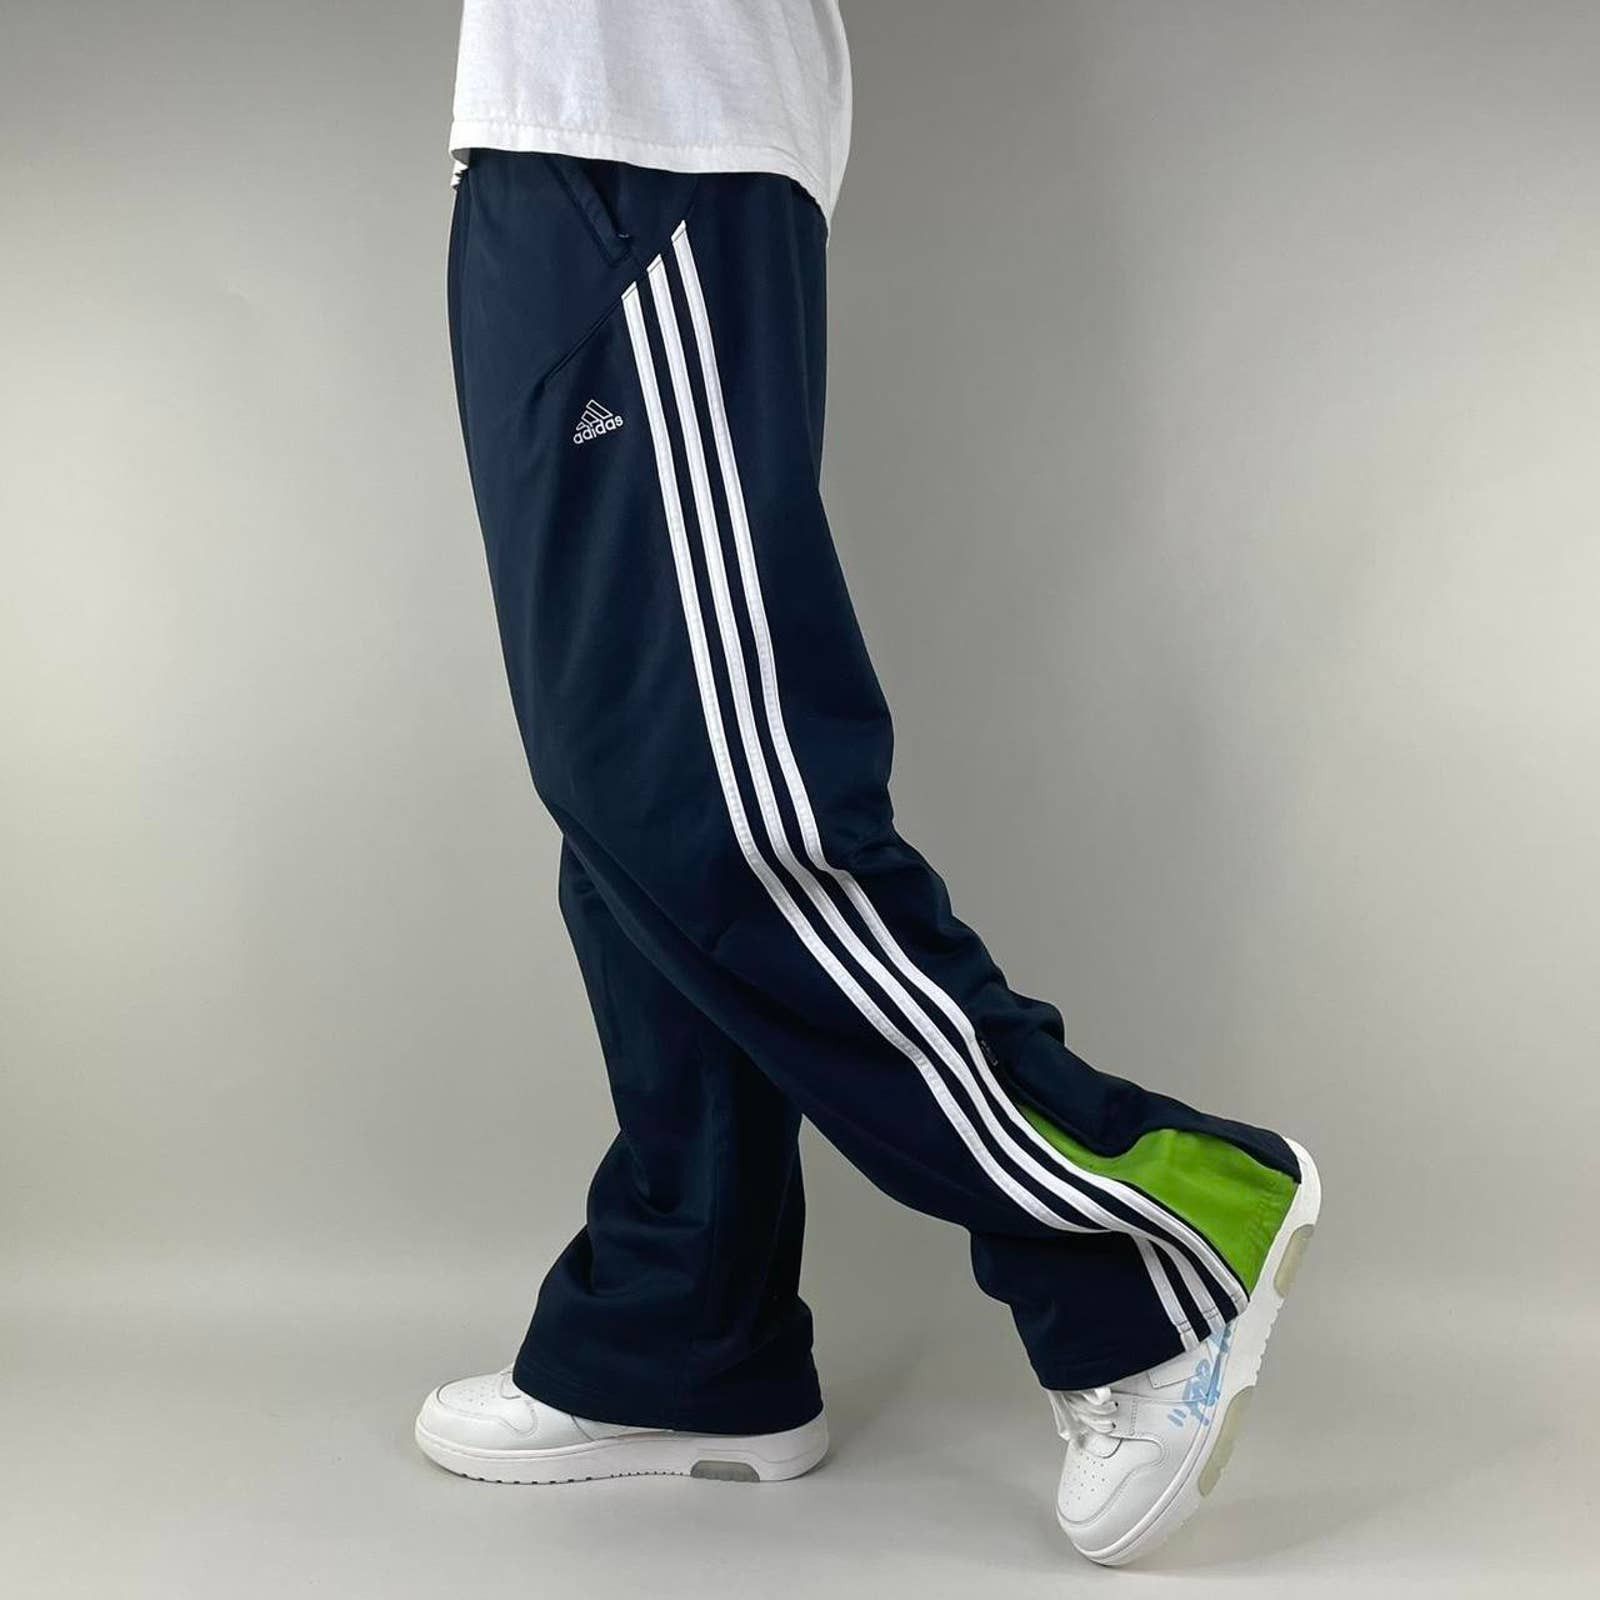 Adidas Super Sick Navy Blue Adidas Trackpants Size US 34 / EU 50 - 1 Preview